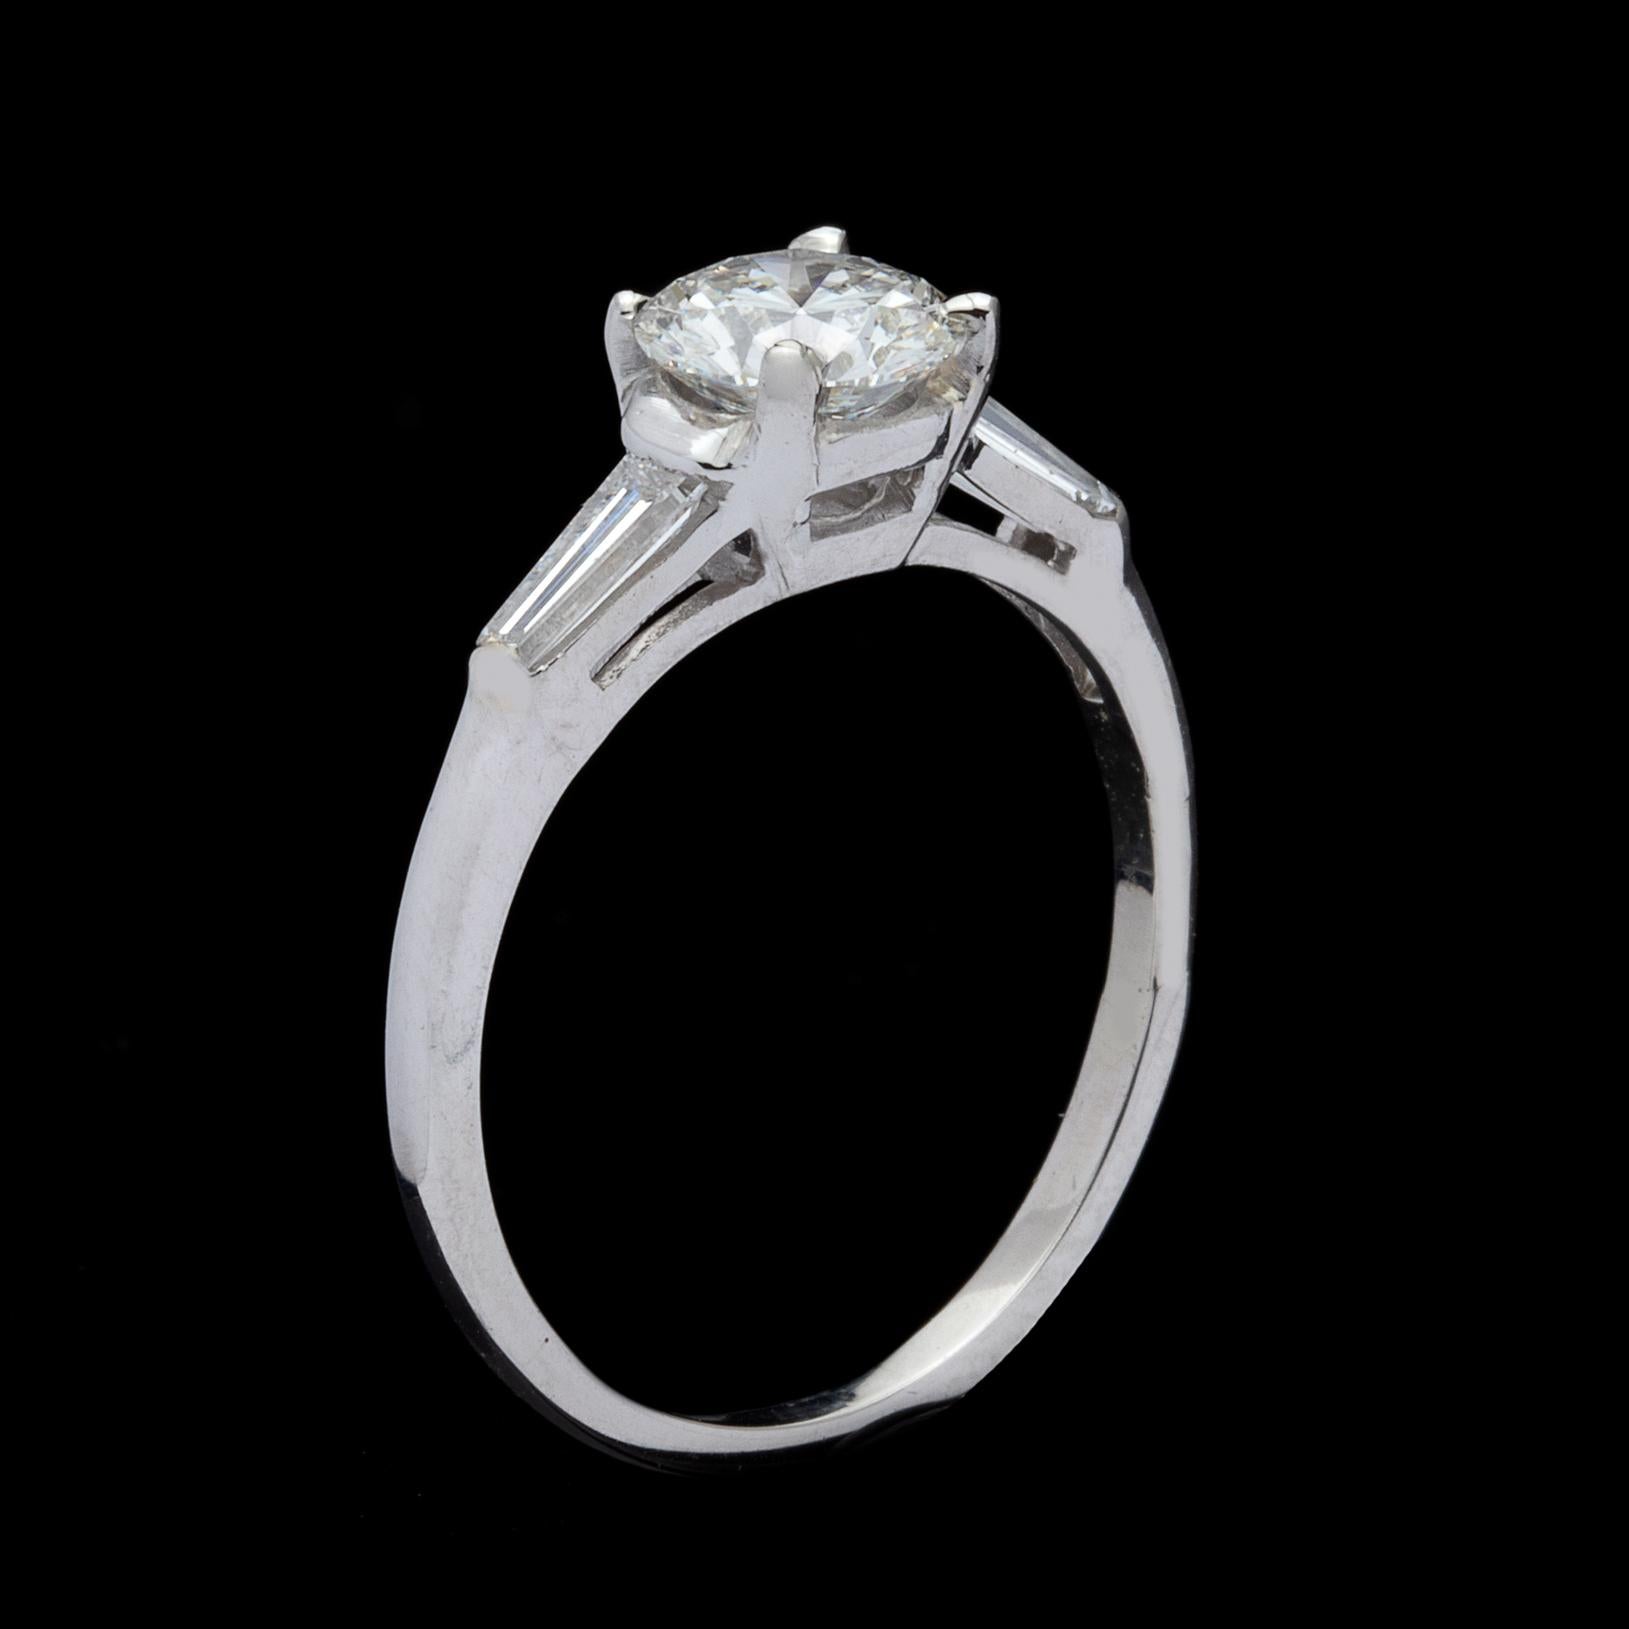 Baguette Cut GIA 1.01 Carat G/VS2 Diamond Engagement Ring